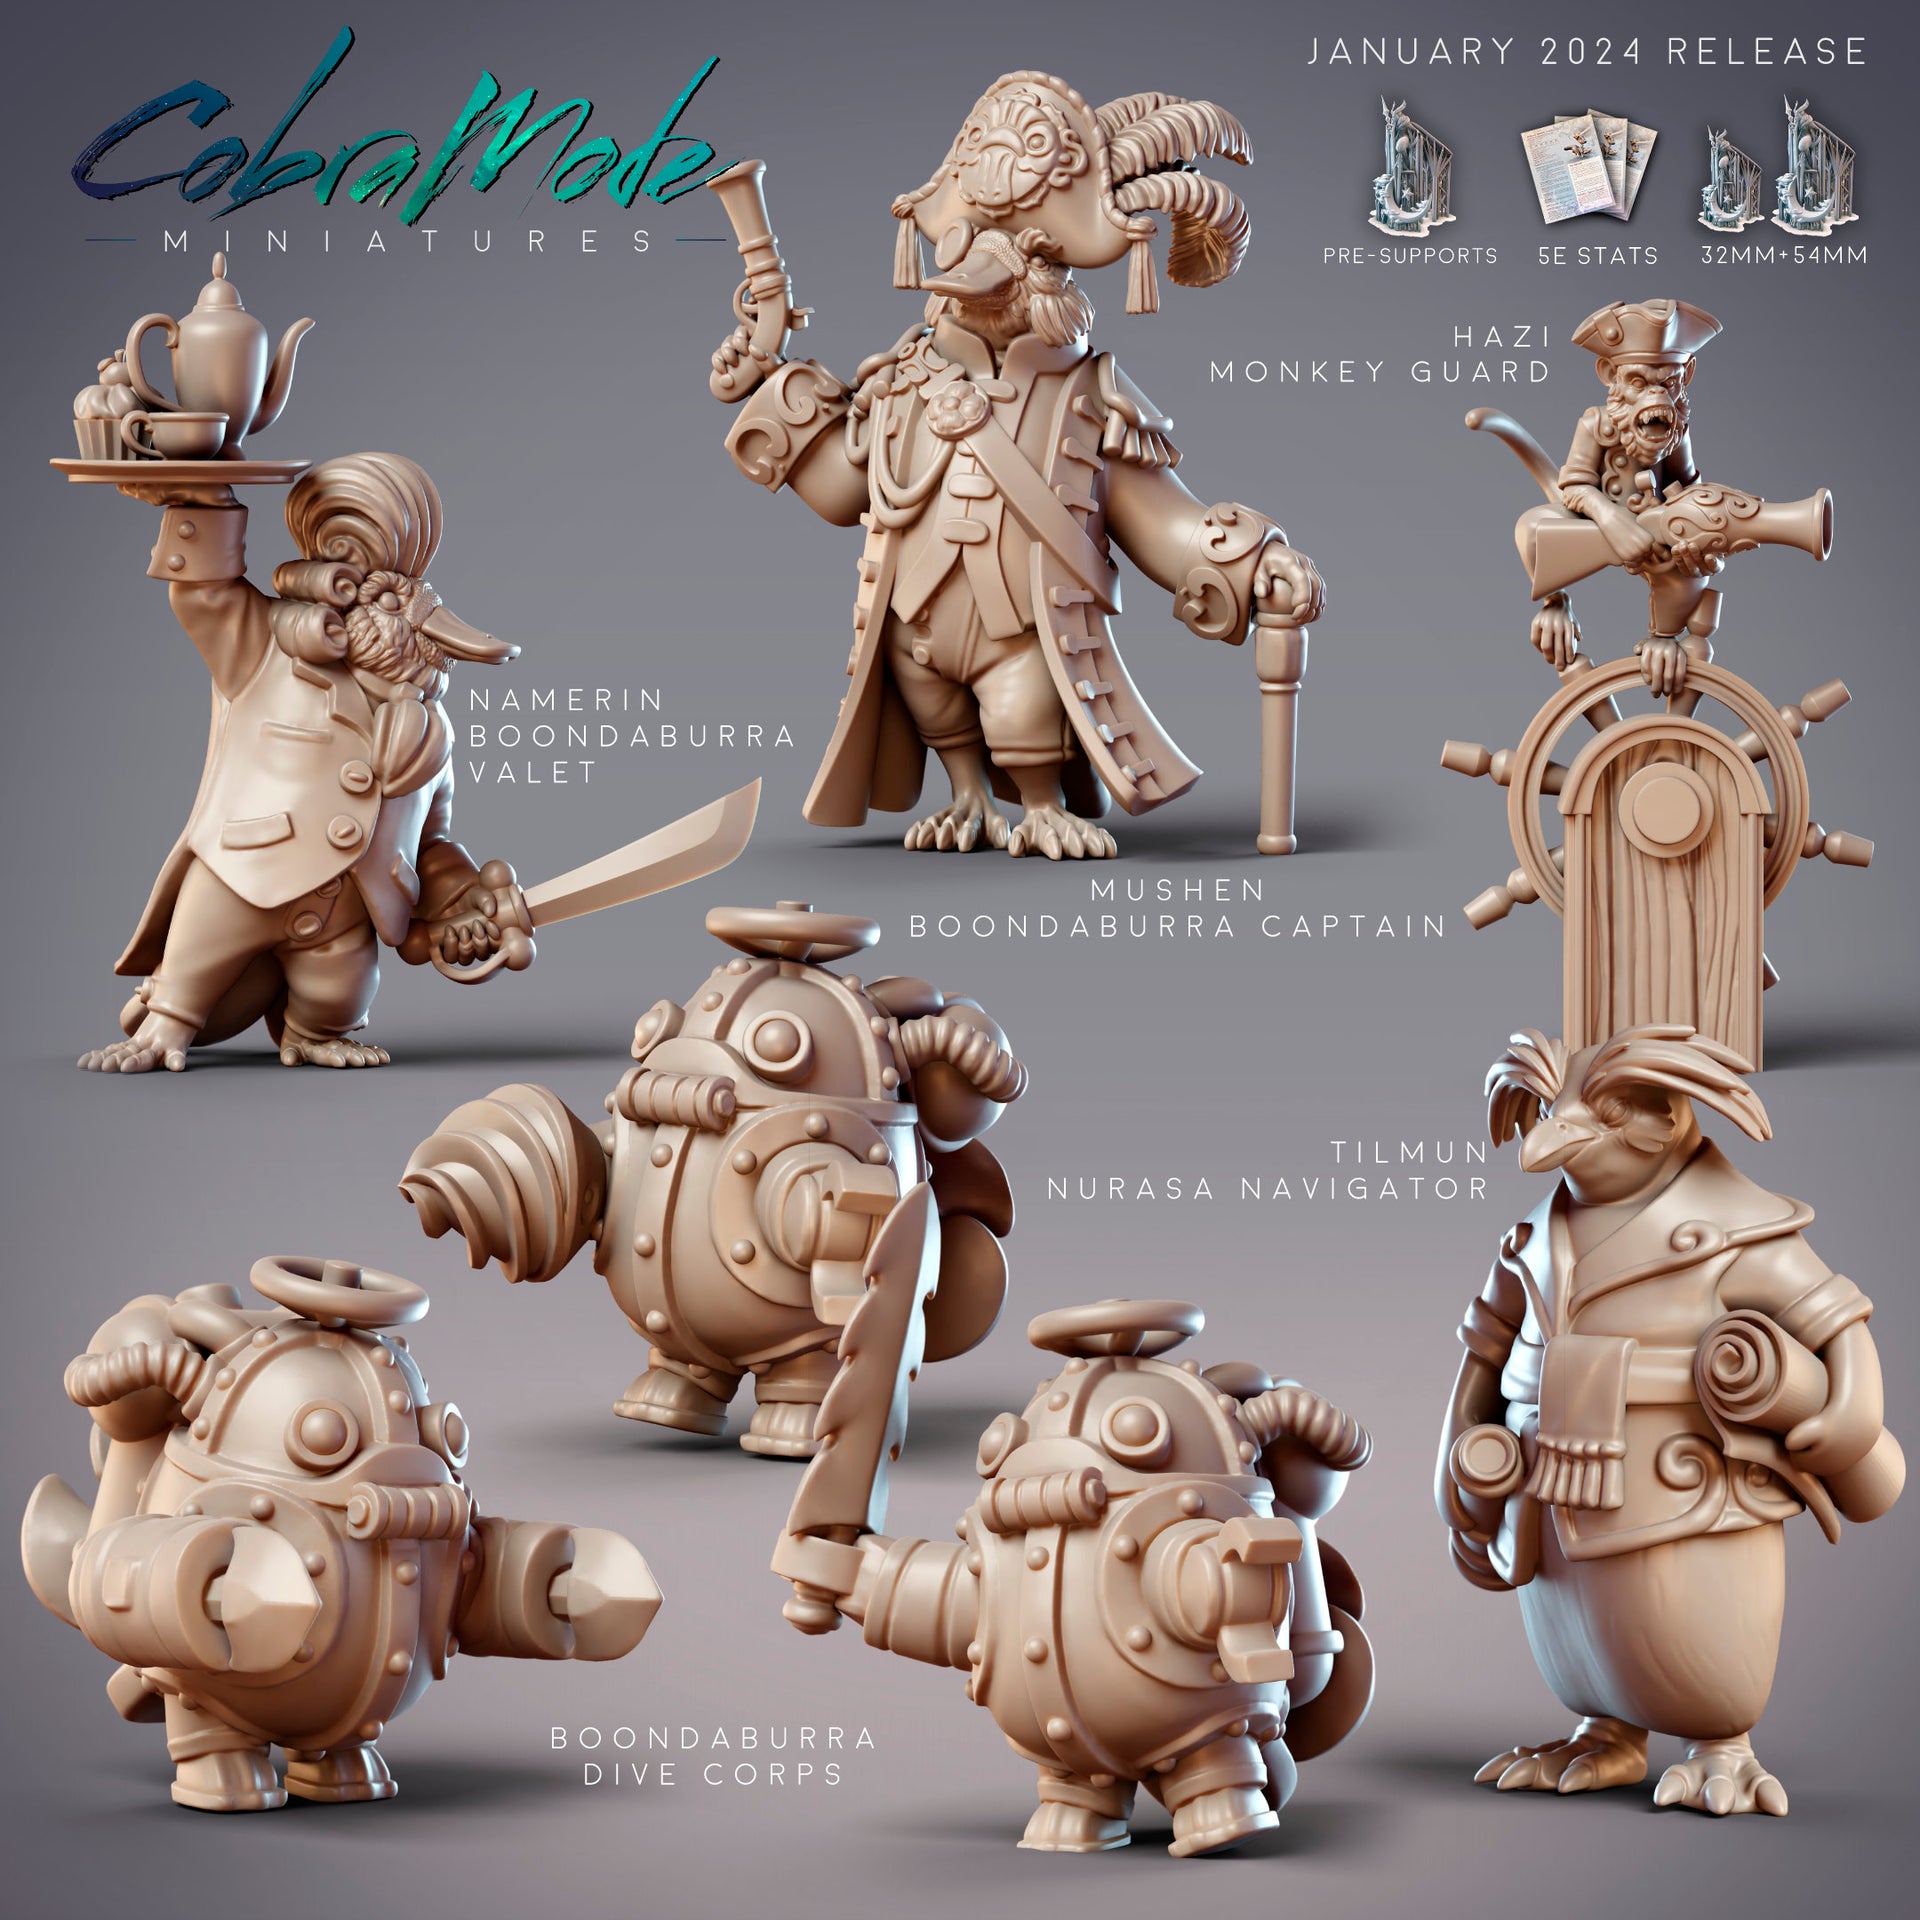 Boondaburra Captain Mushen, Platypus Sailor - CobraMode | Miniature | Wargaming | Roleplaying Games | 32m | Admiral | Pirate | Navy